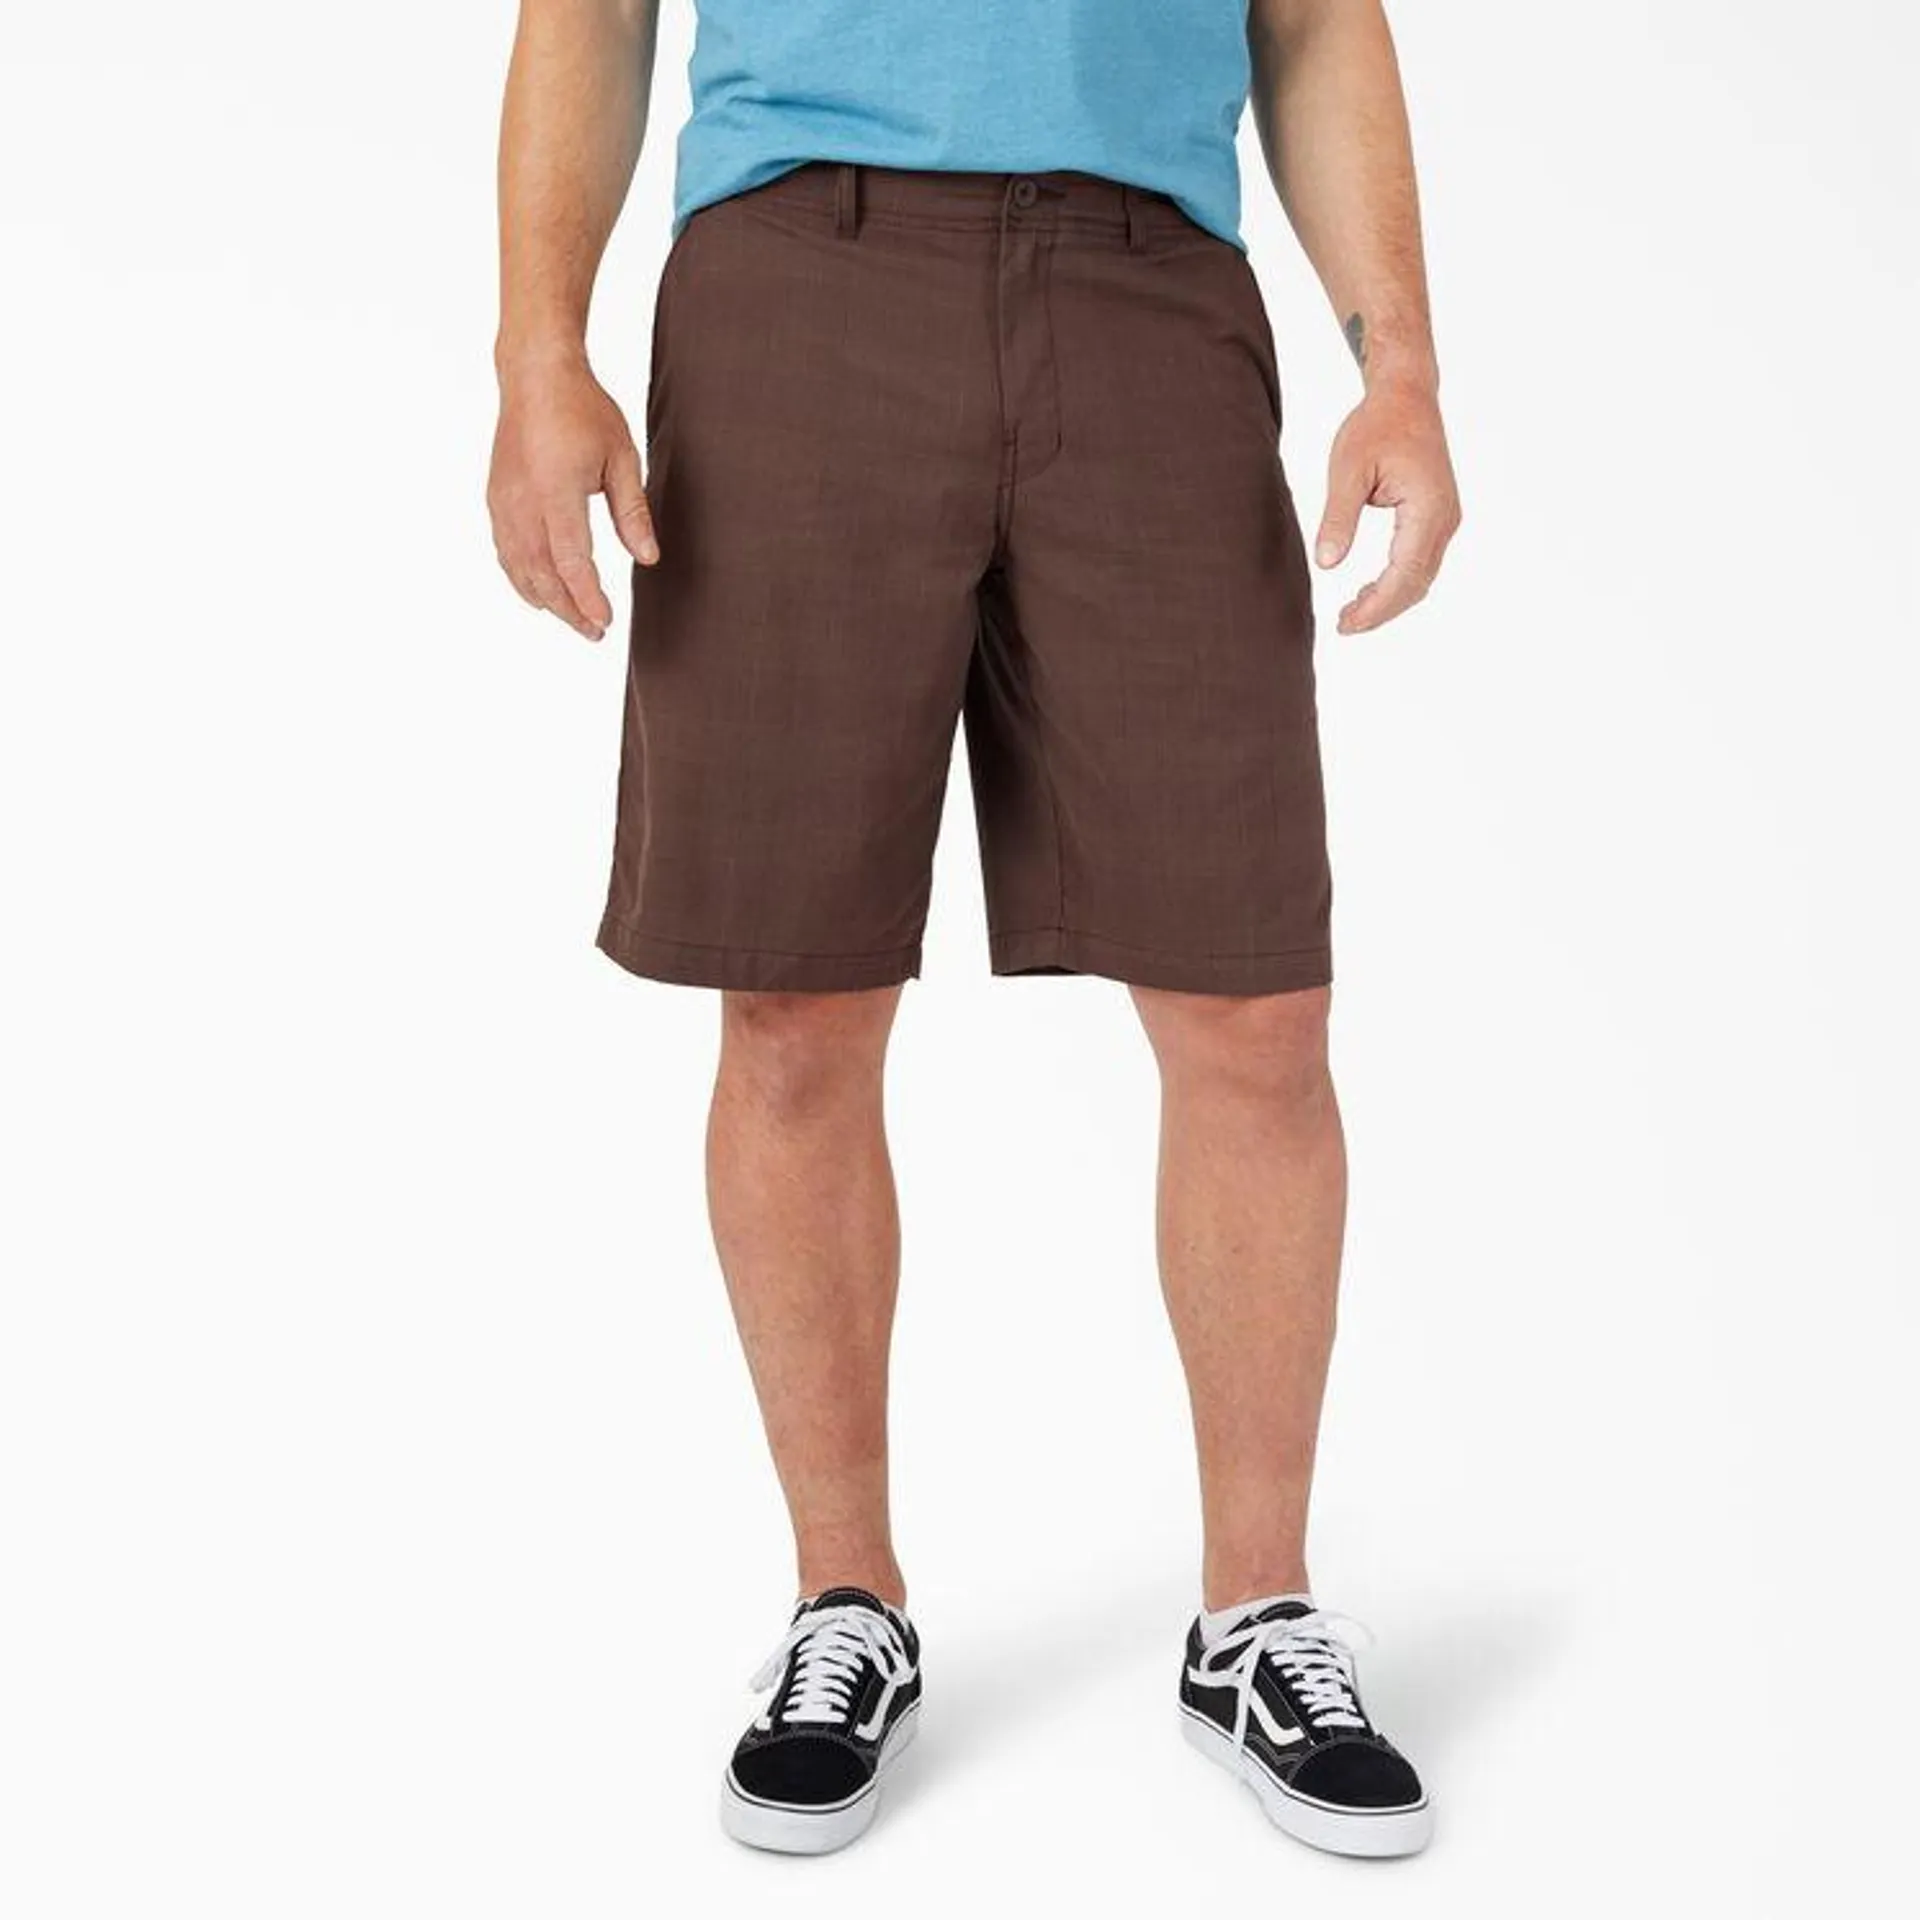 Dickies X-Series Active Waist Plaid Shorts, 11", Chocolate Brown Plaid